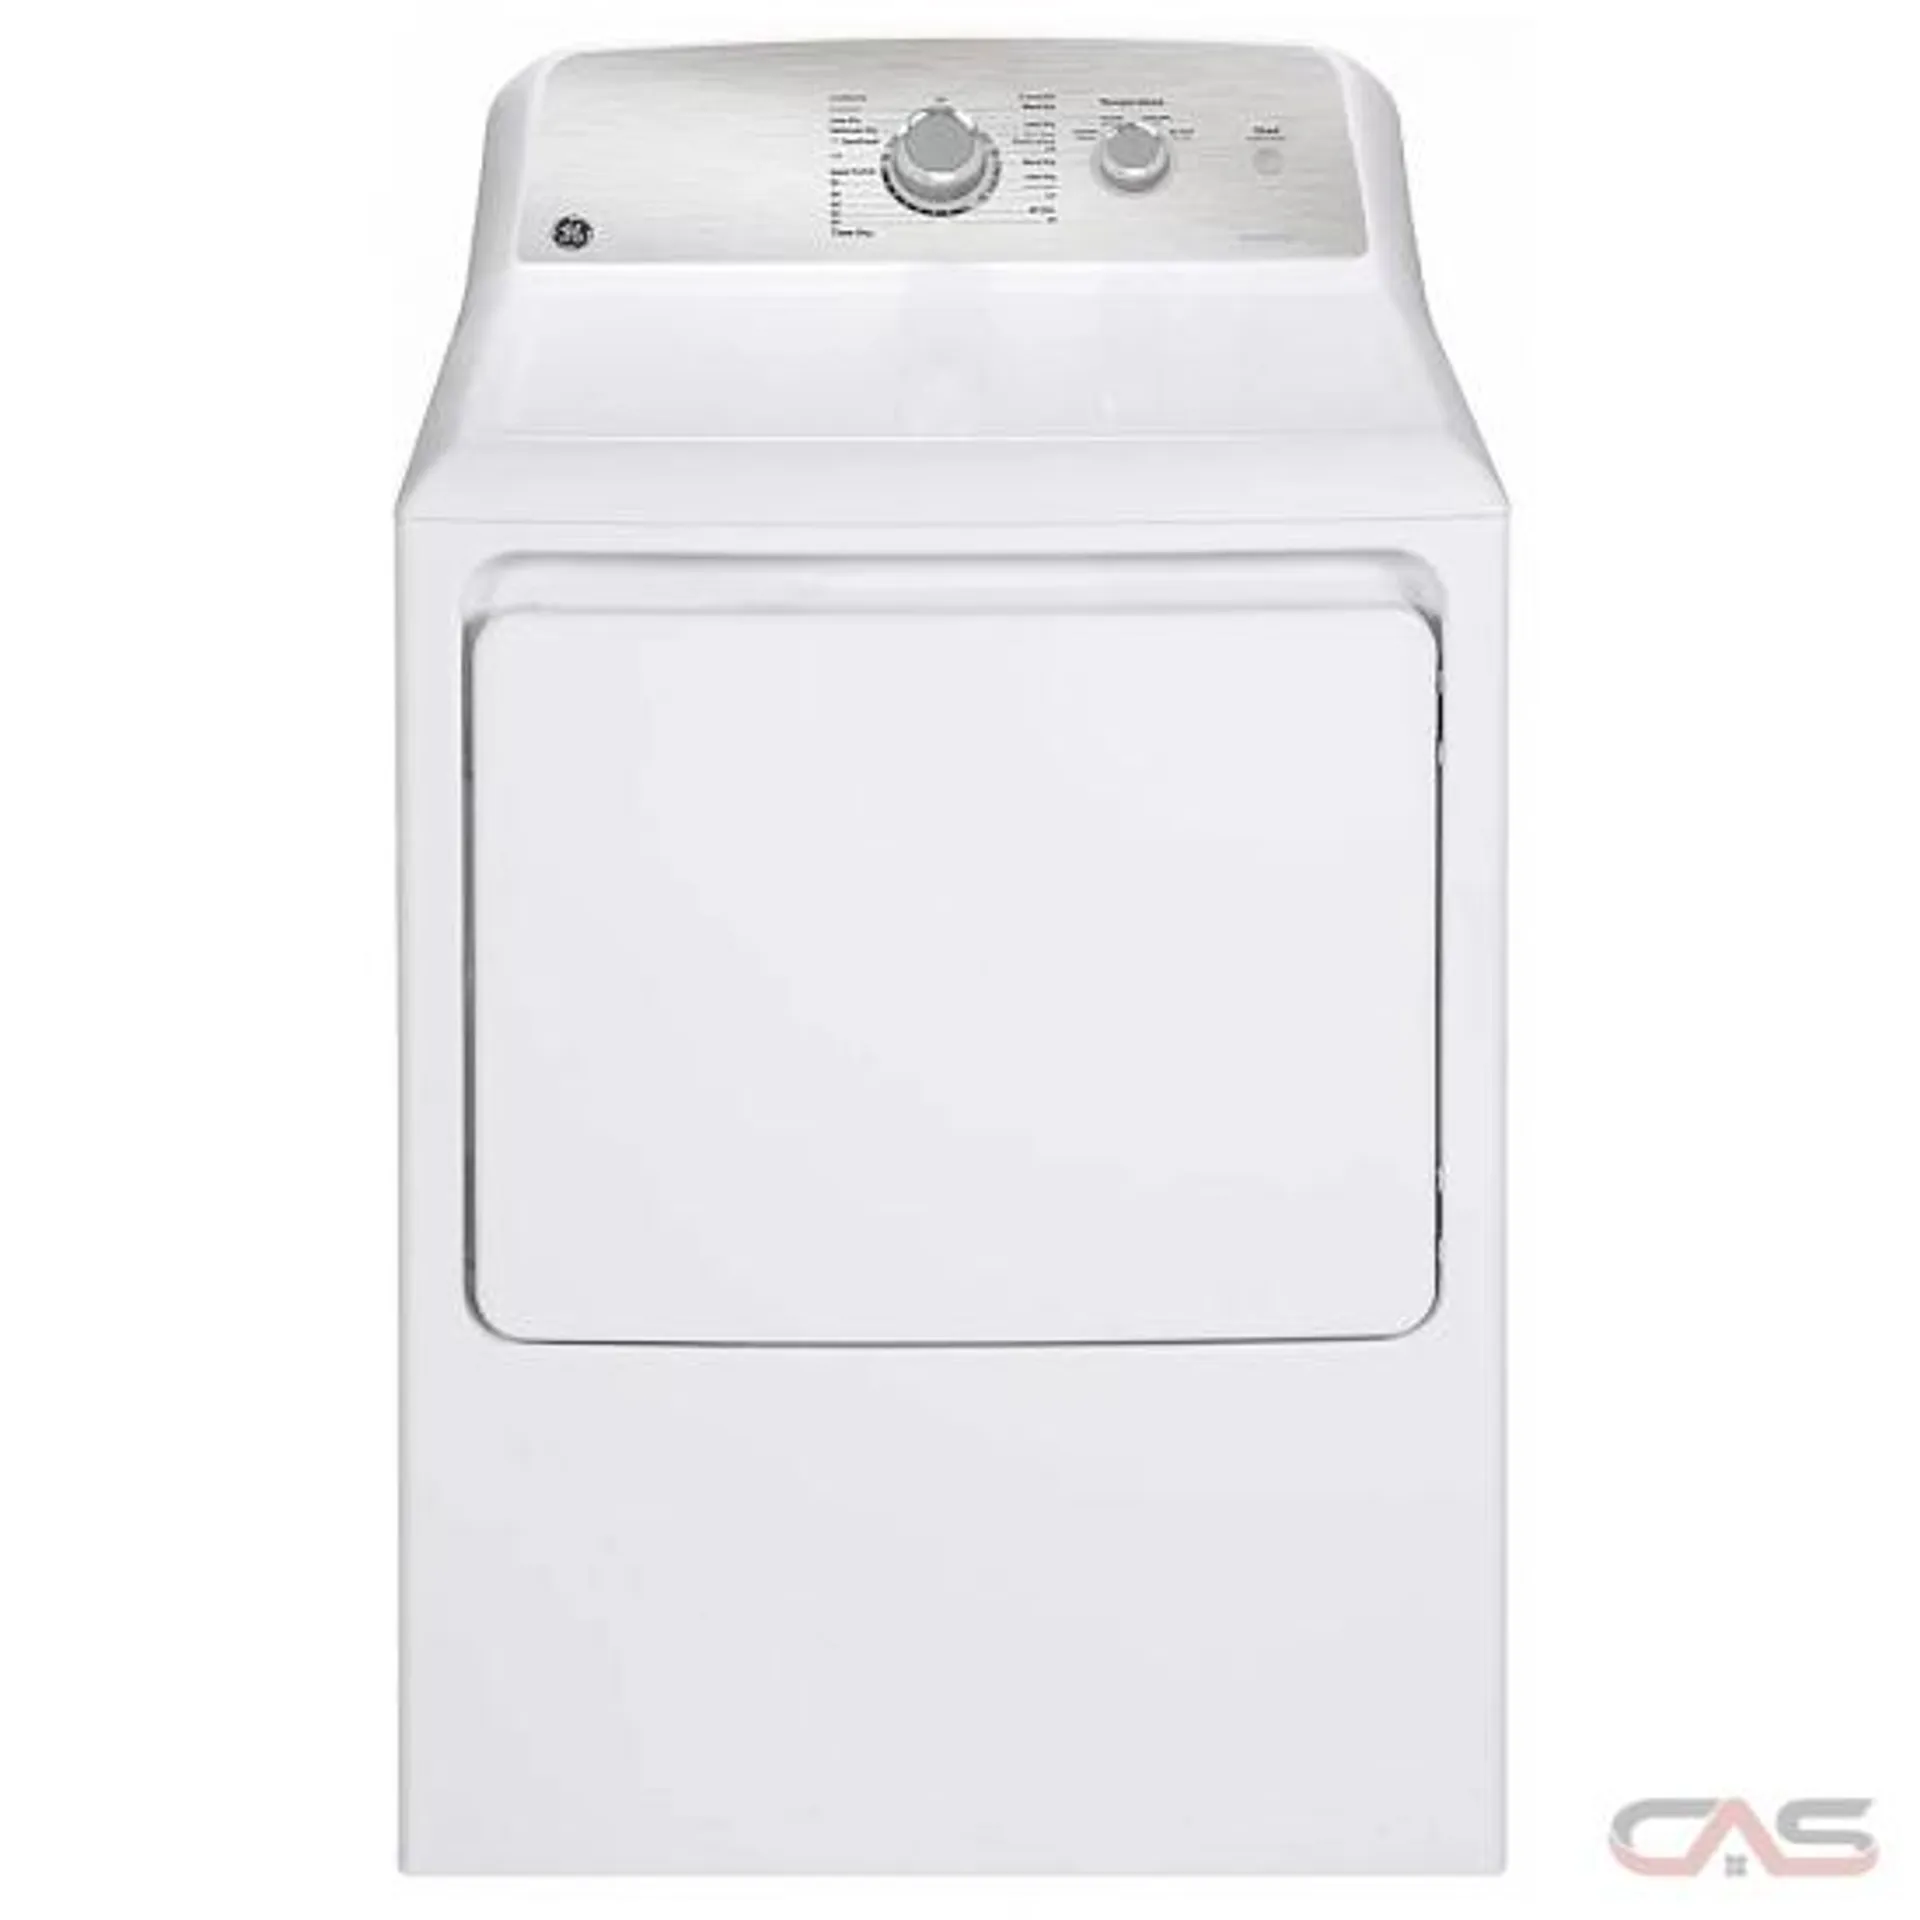 GE GTD40GBMRWS Dryer, 27 inch Width, Gas Dryer, 7.2 cu. ft. Capacity, 4 Temperature Settings, Steel Drum, White colour